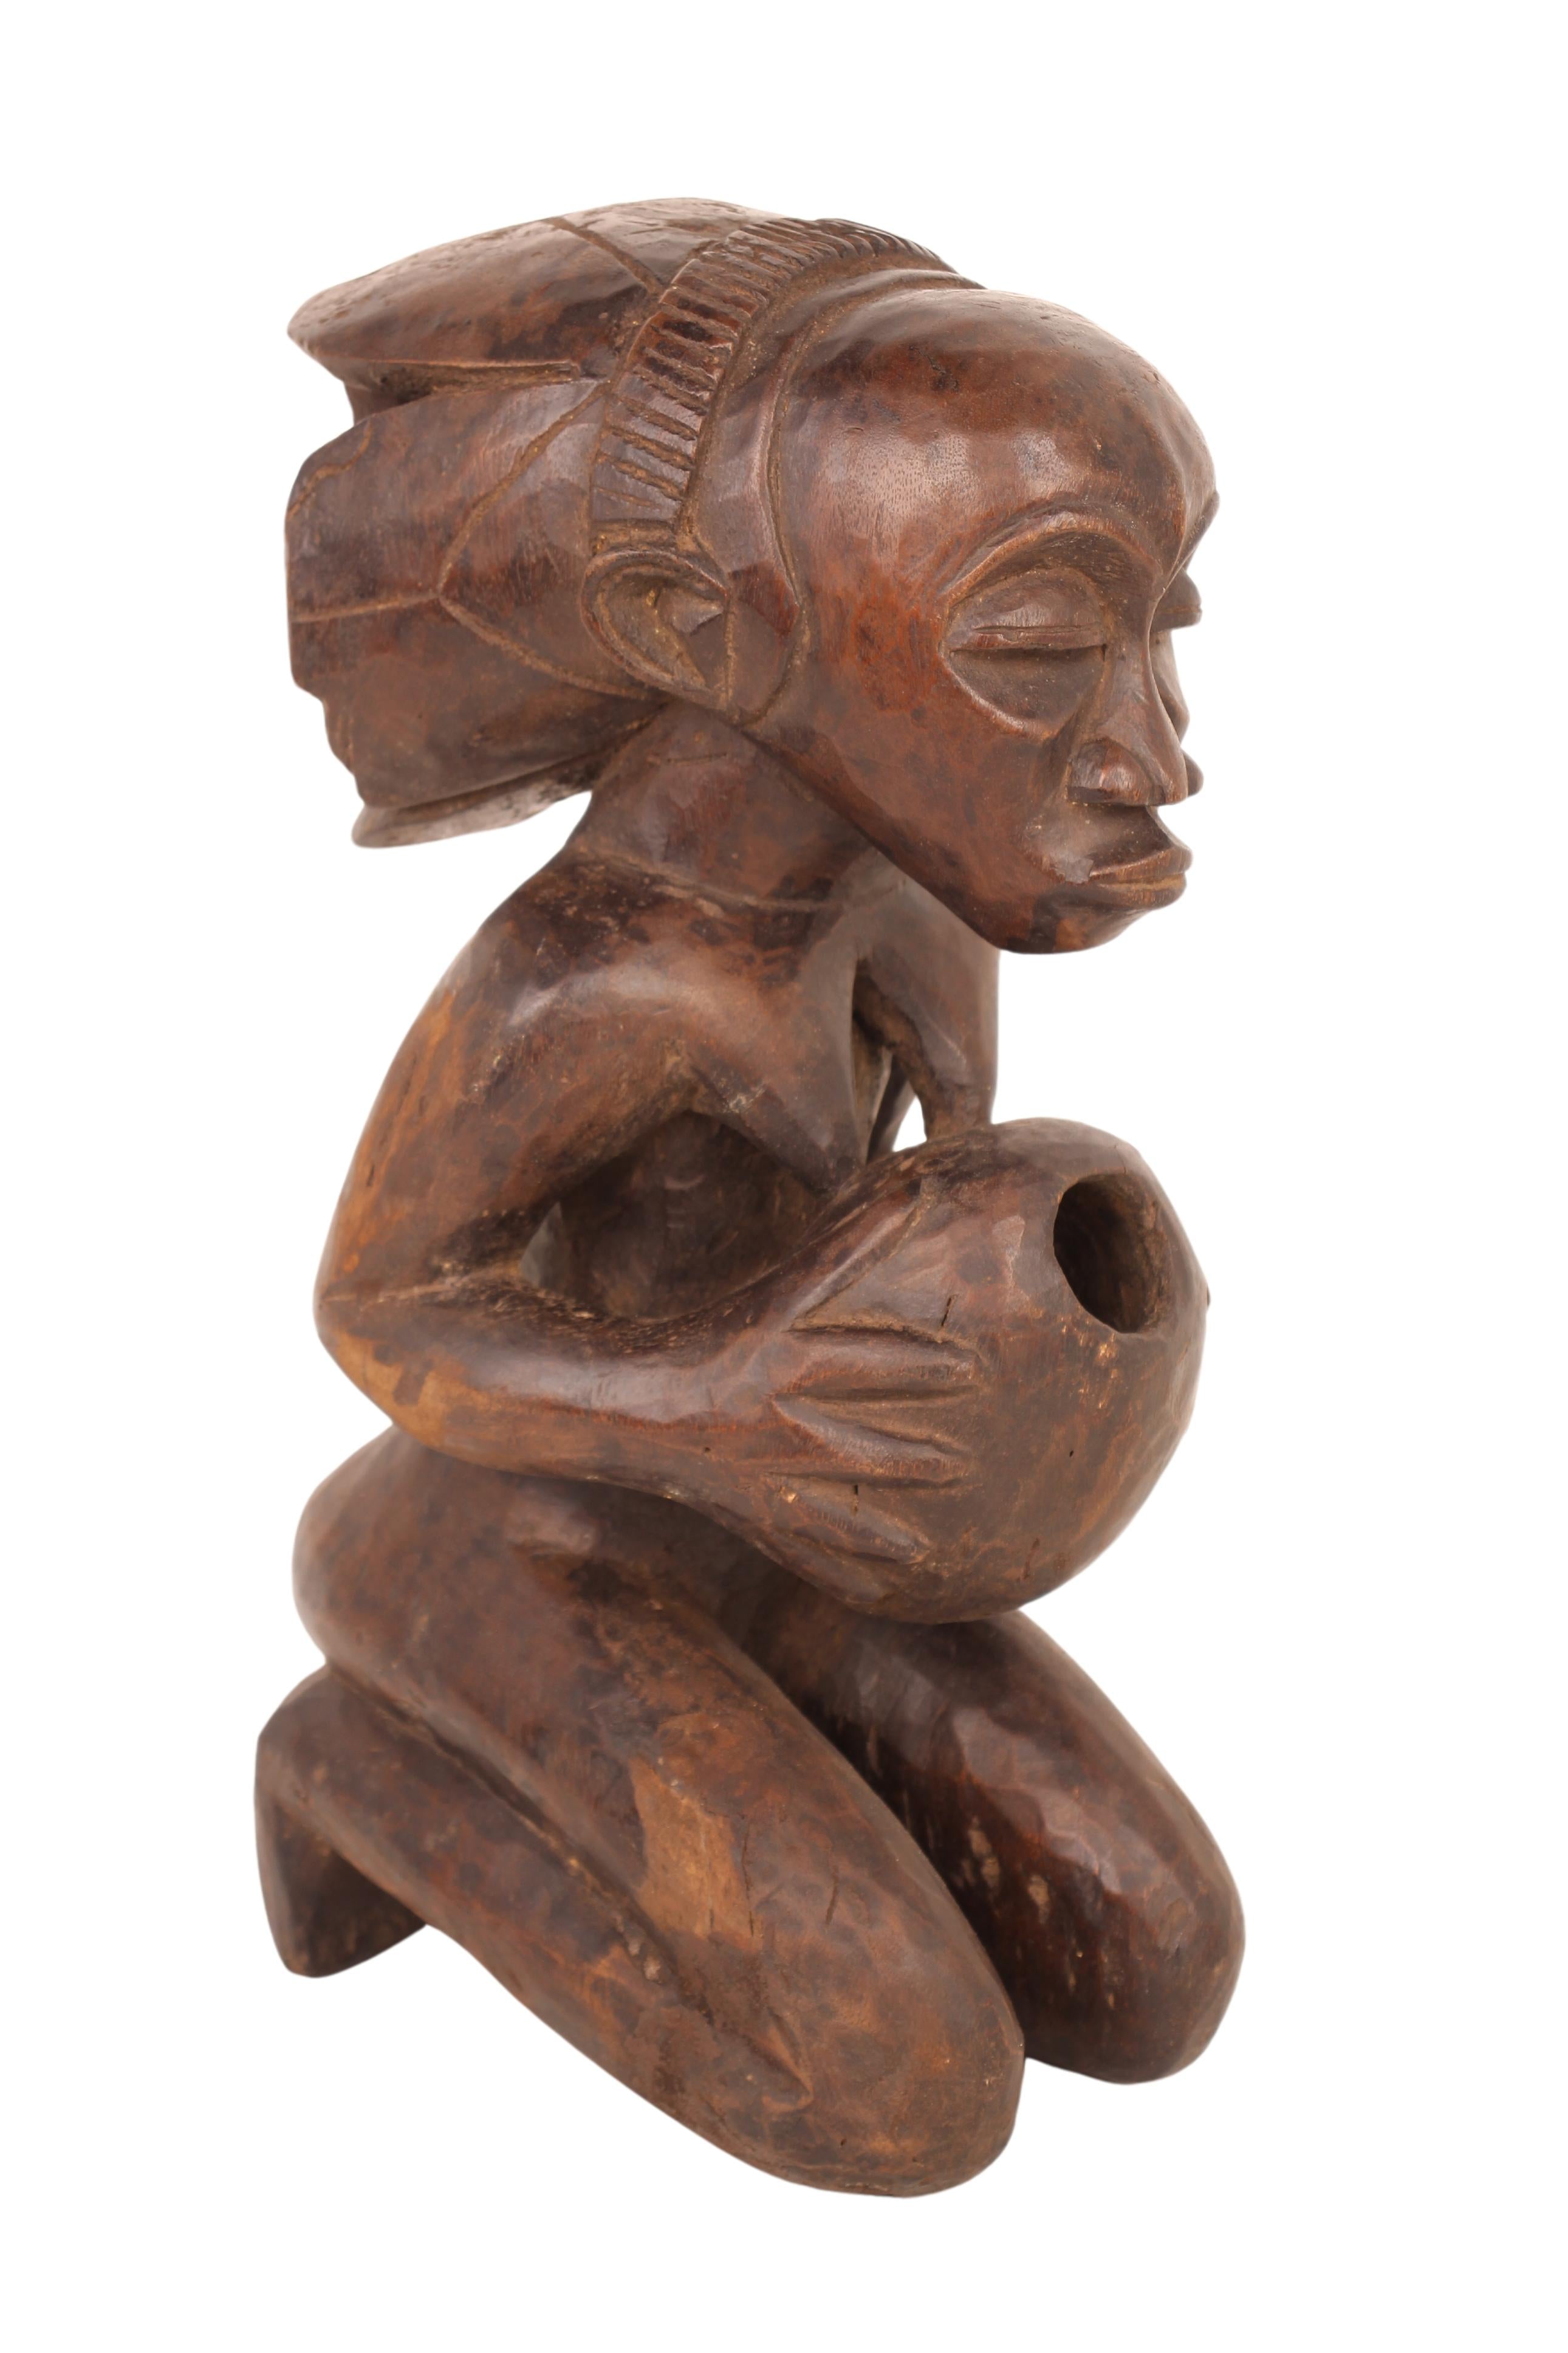 Luba/Baluba Tribe Sculptures ~15.4" Tall (New 2024)